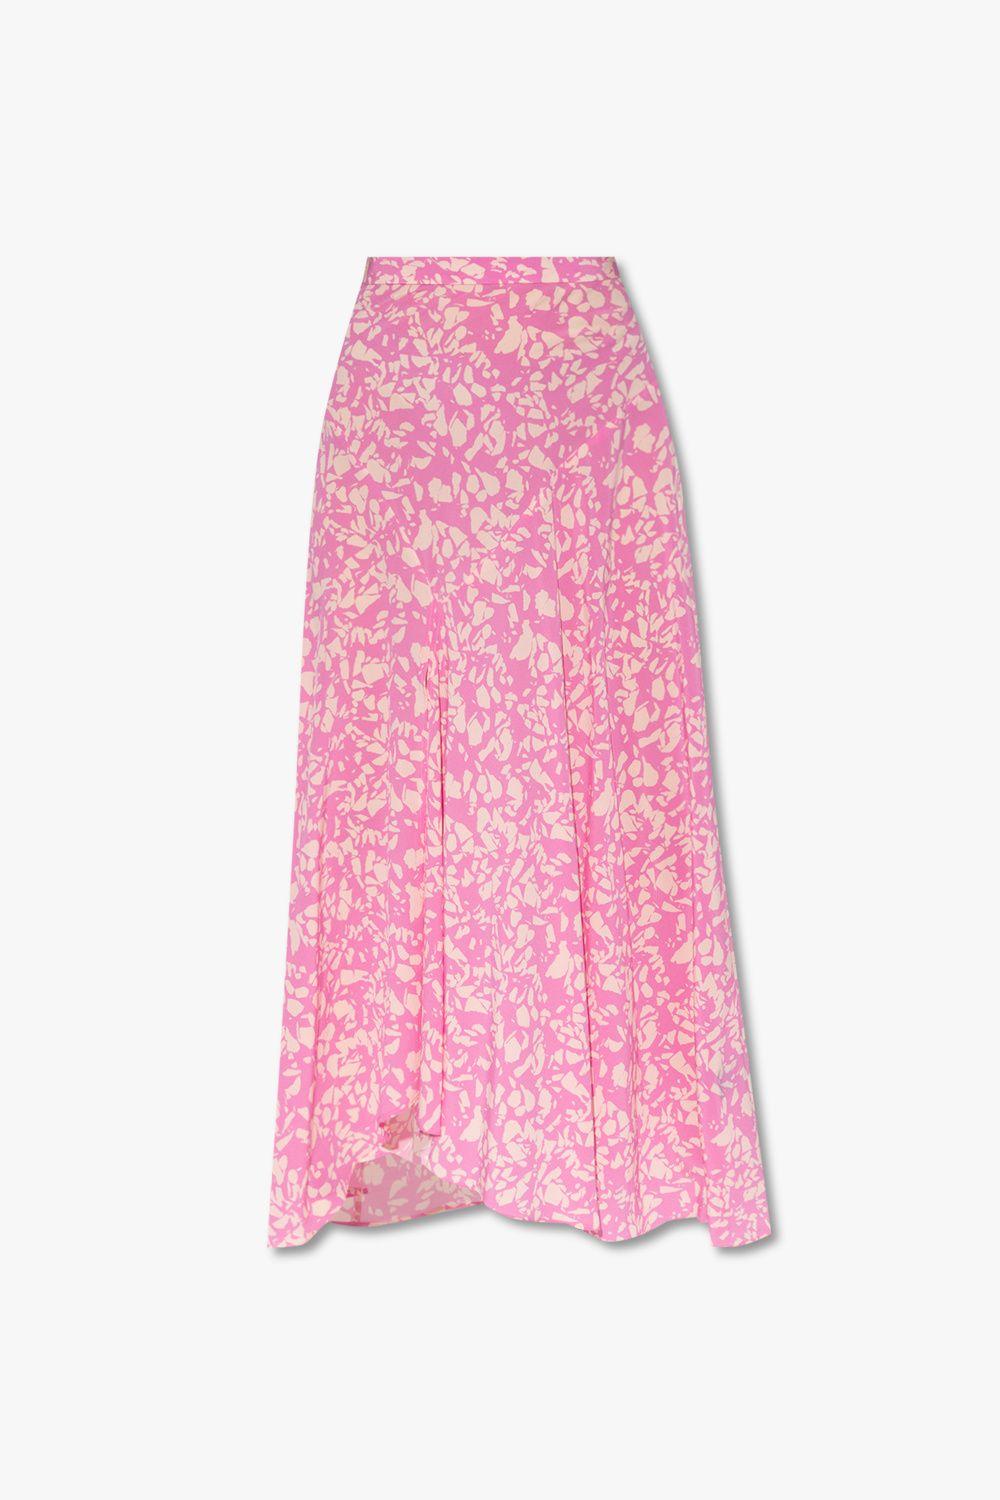 Isabel Marant 'sakura' Silk Skirt in Pink | Lyst